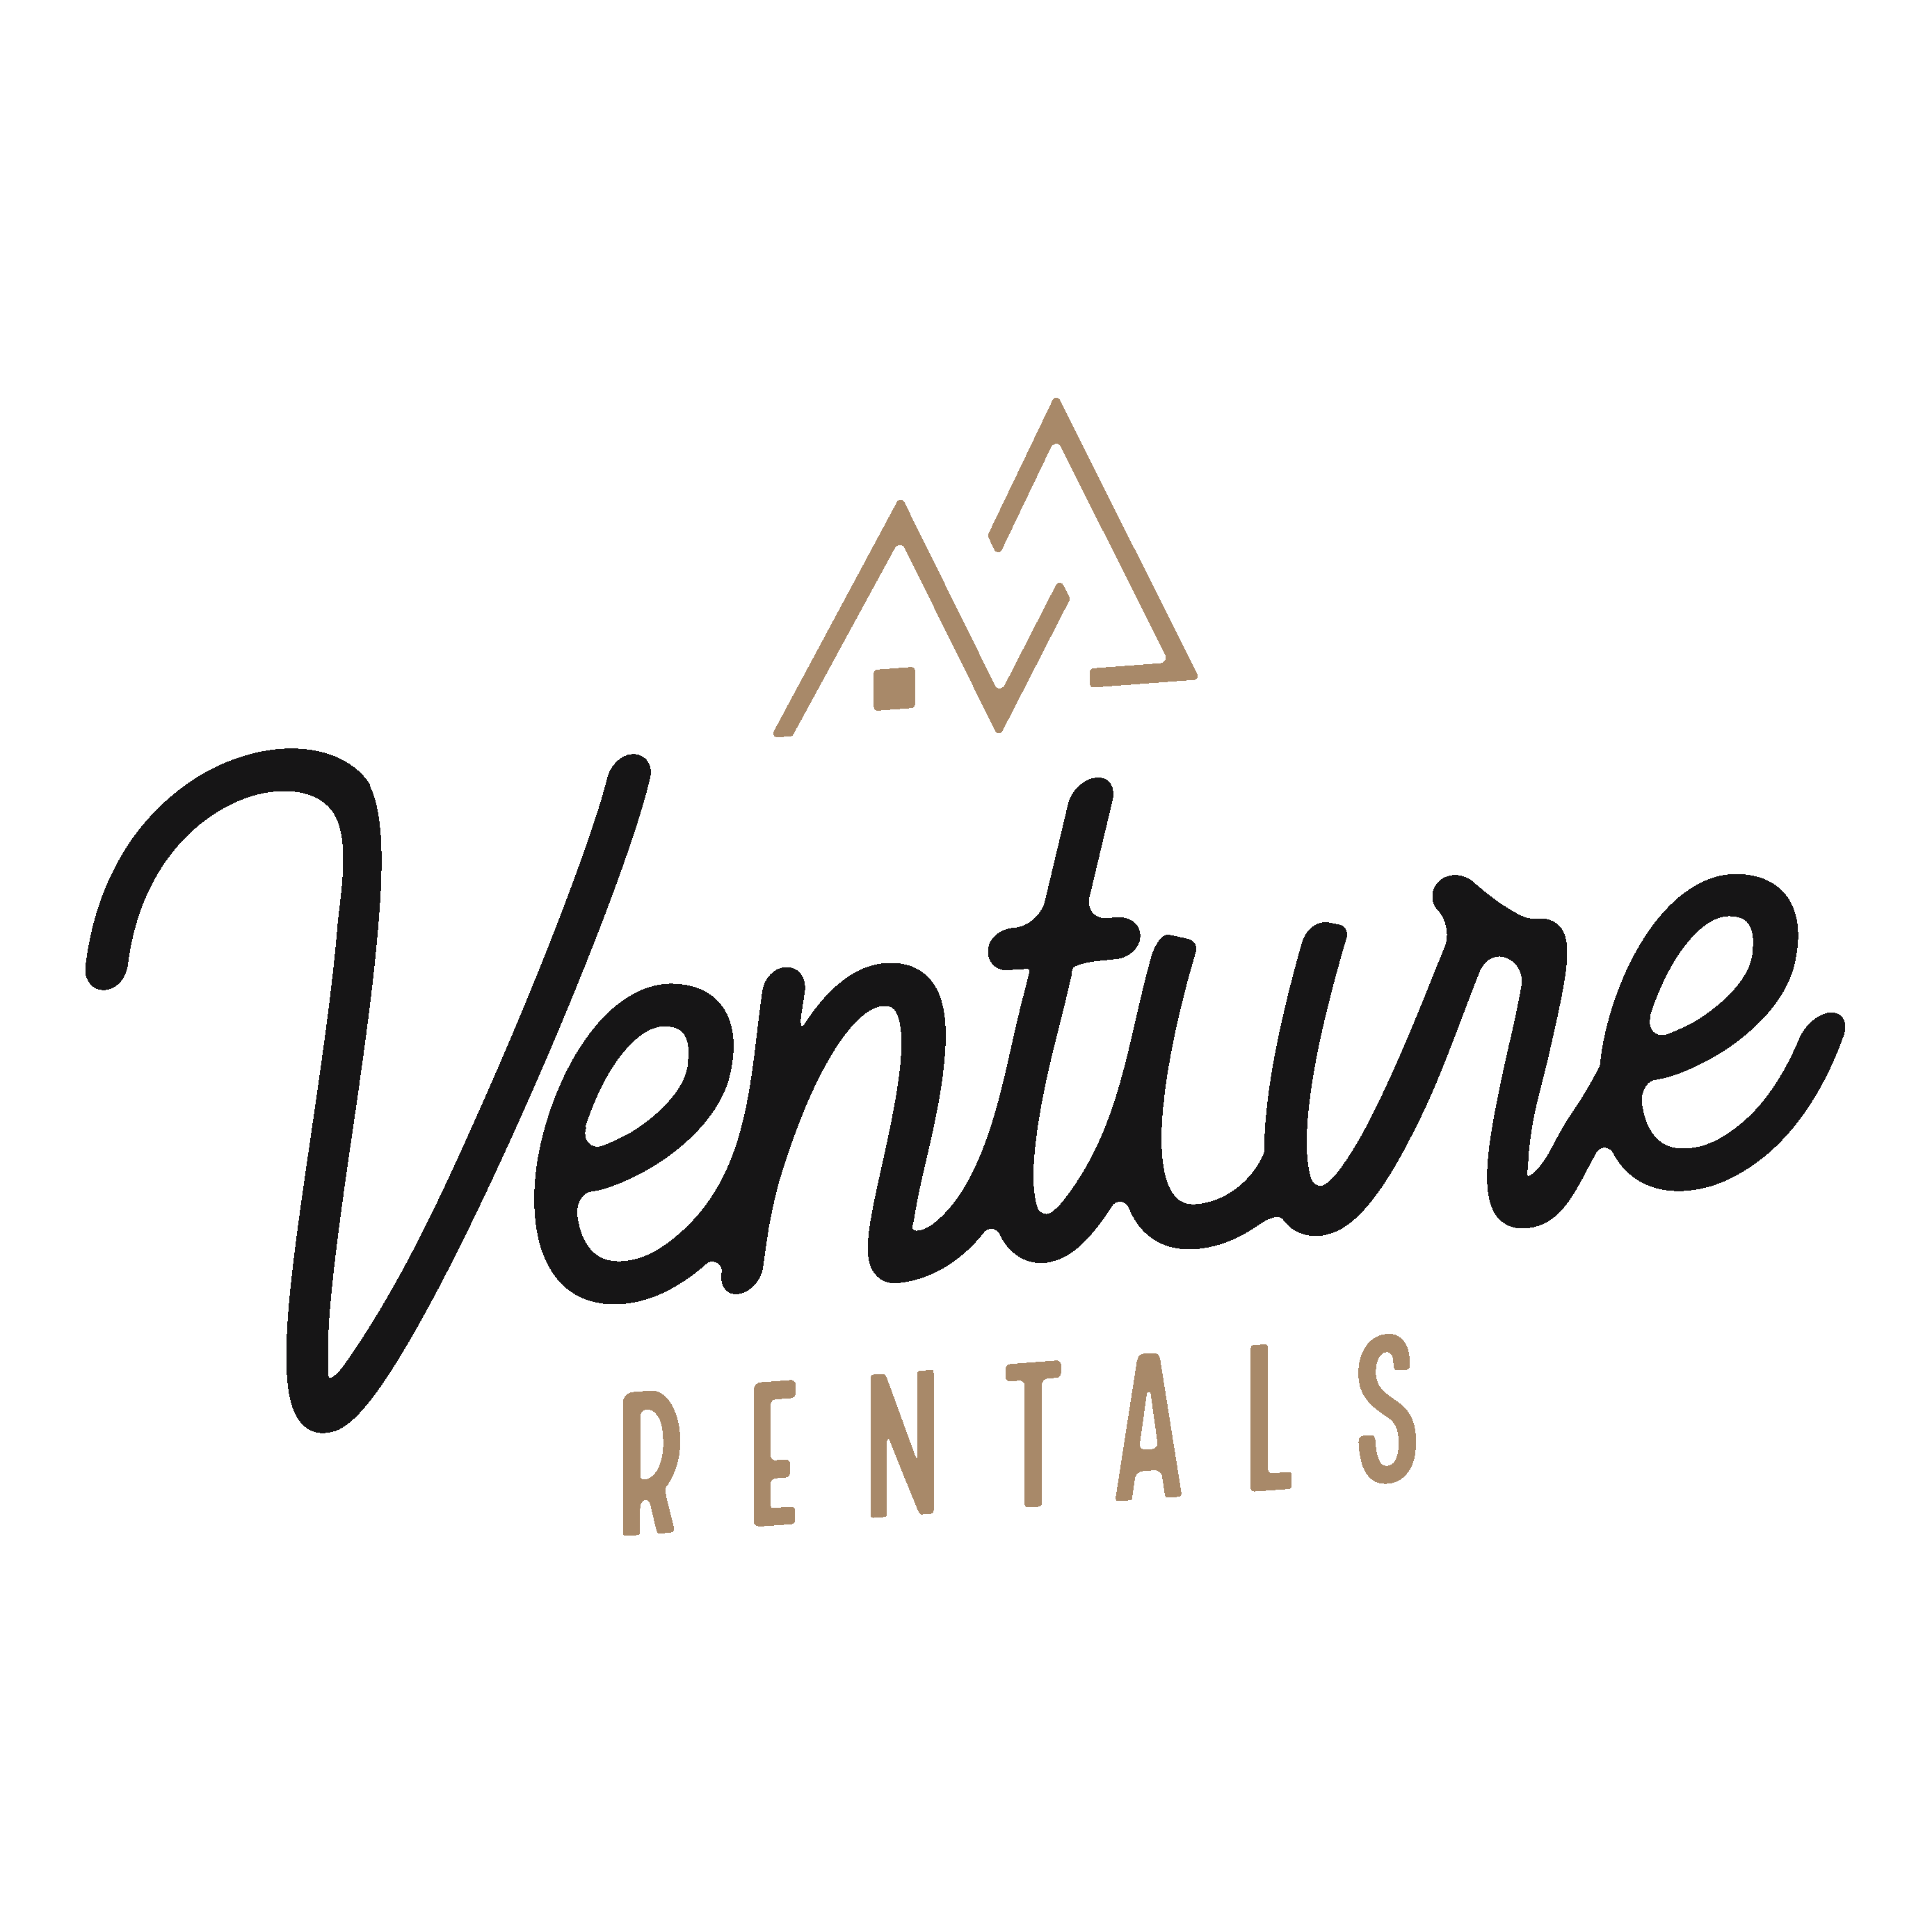 Venture Rentals brand logo